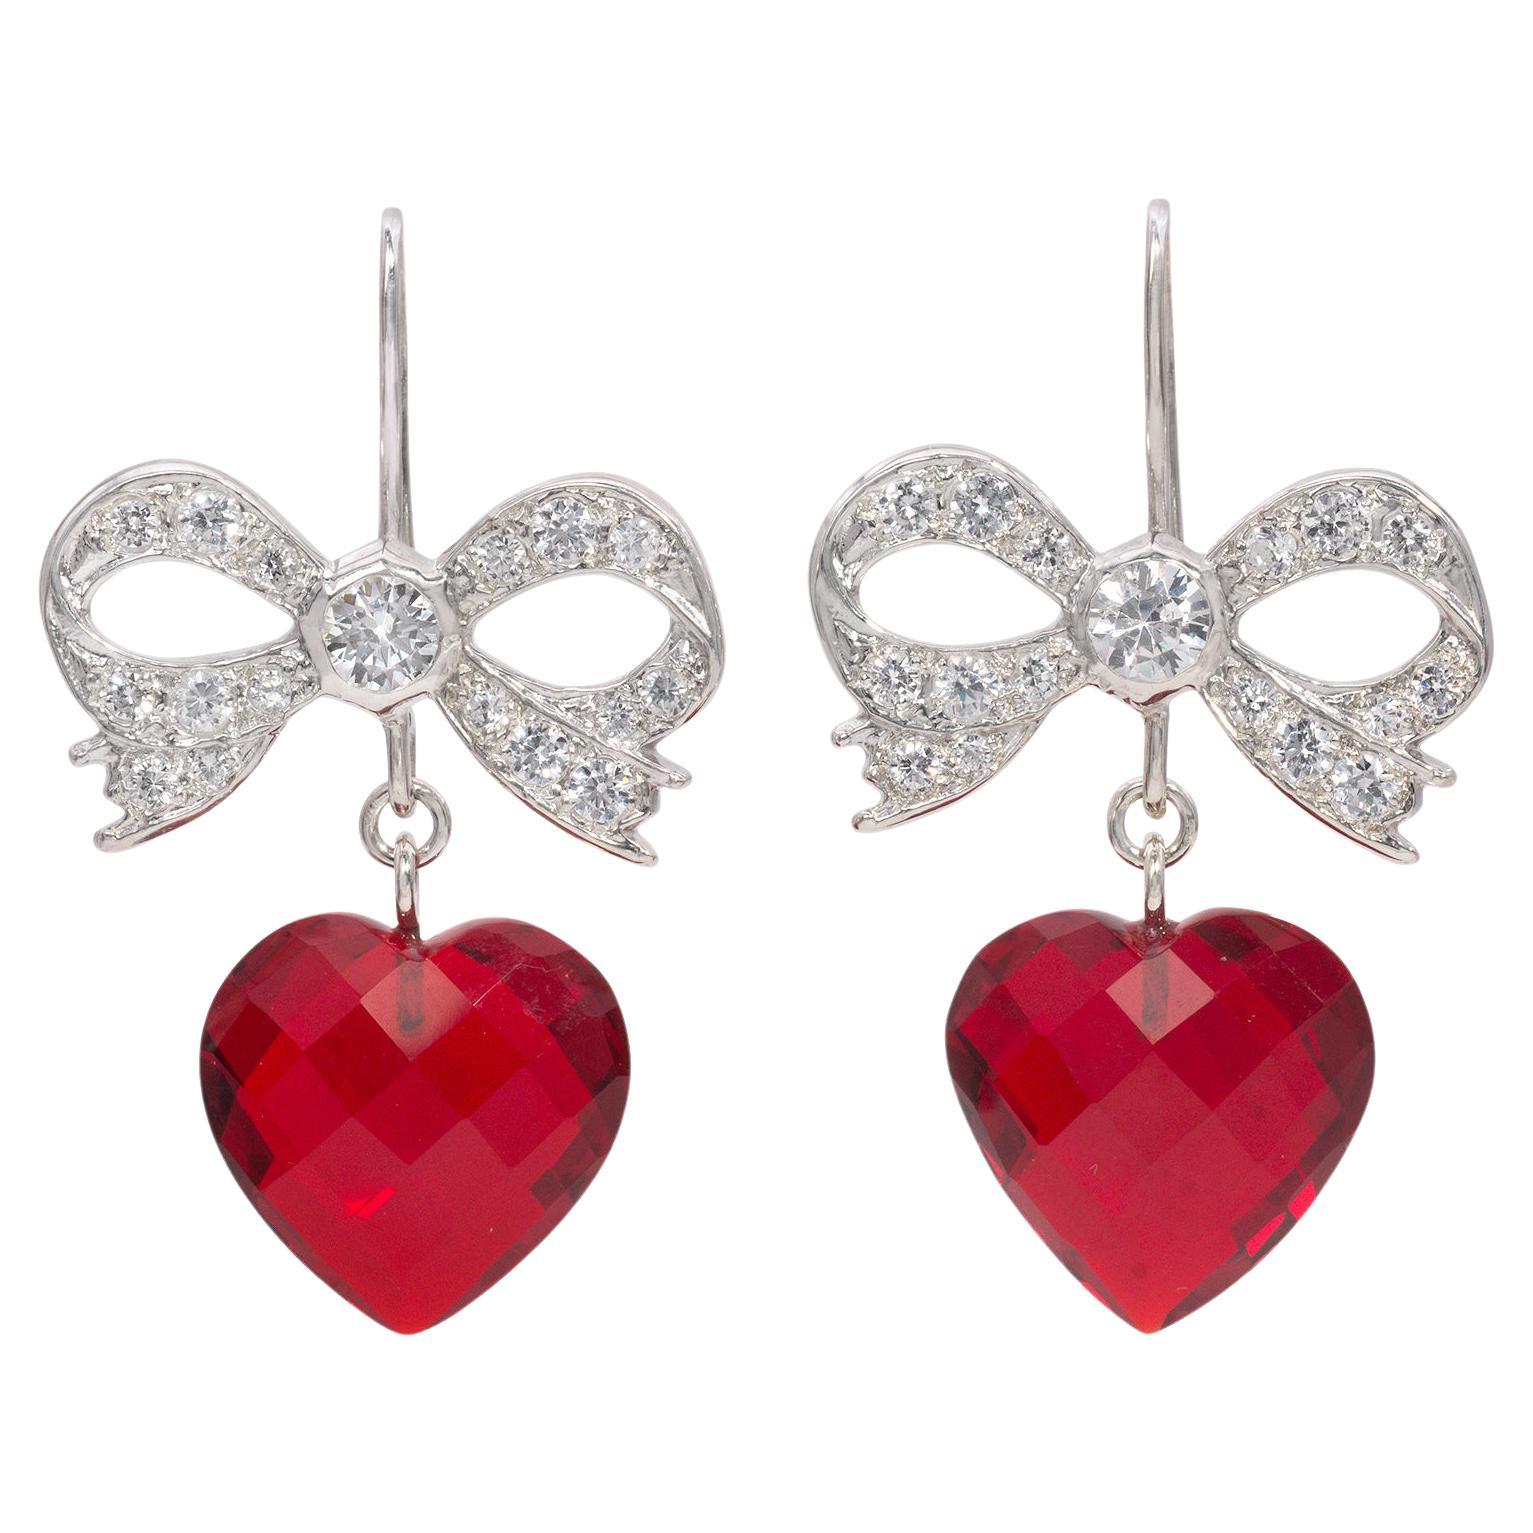 Heart Shaped Glass Drop Earrings - The Artisan Store Fremantle